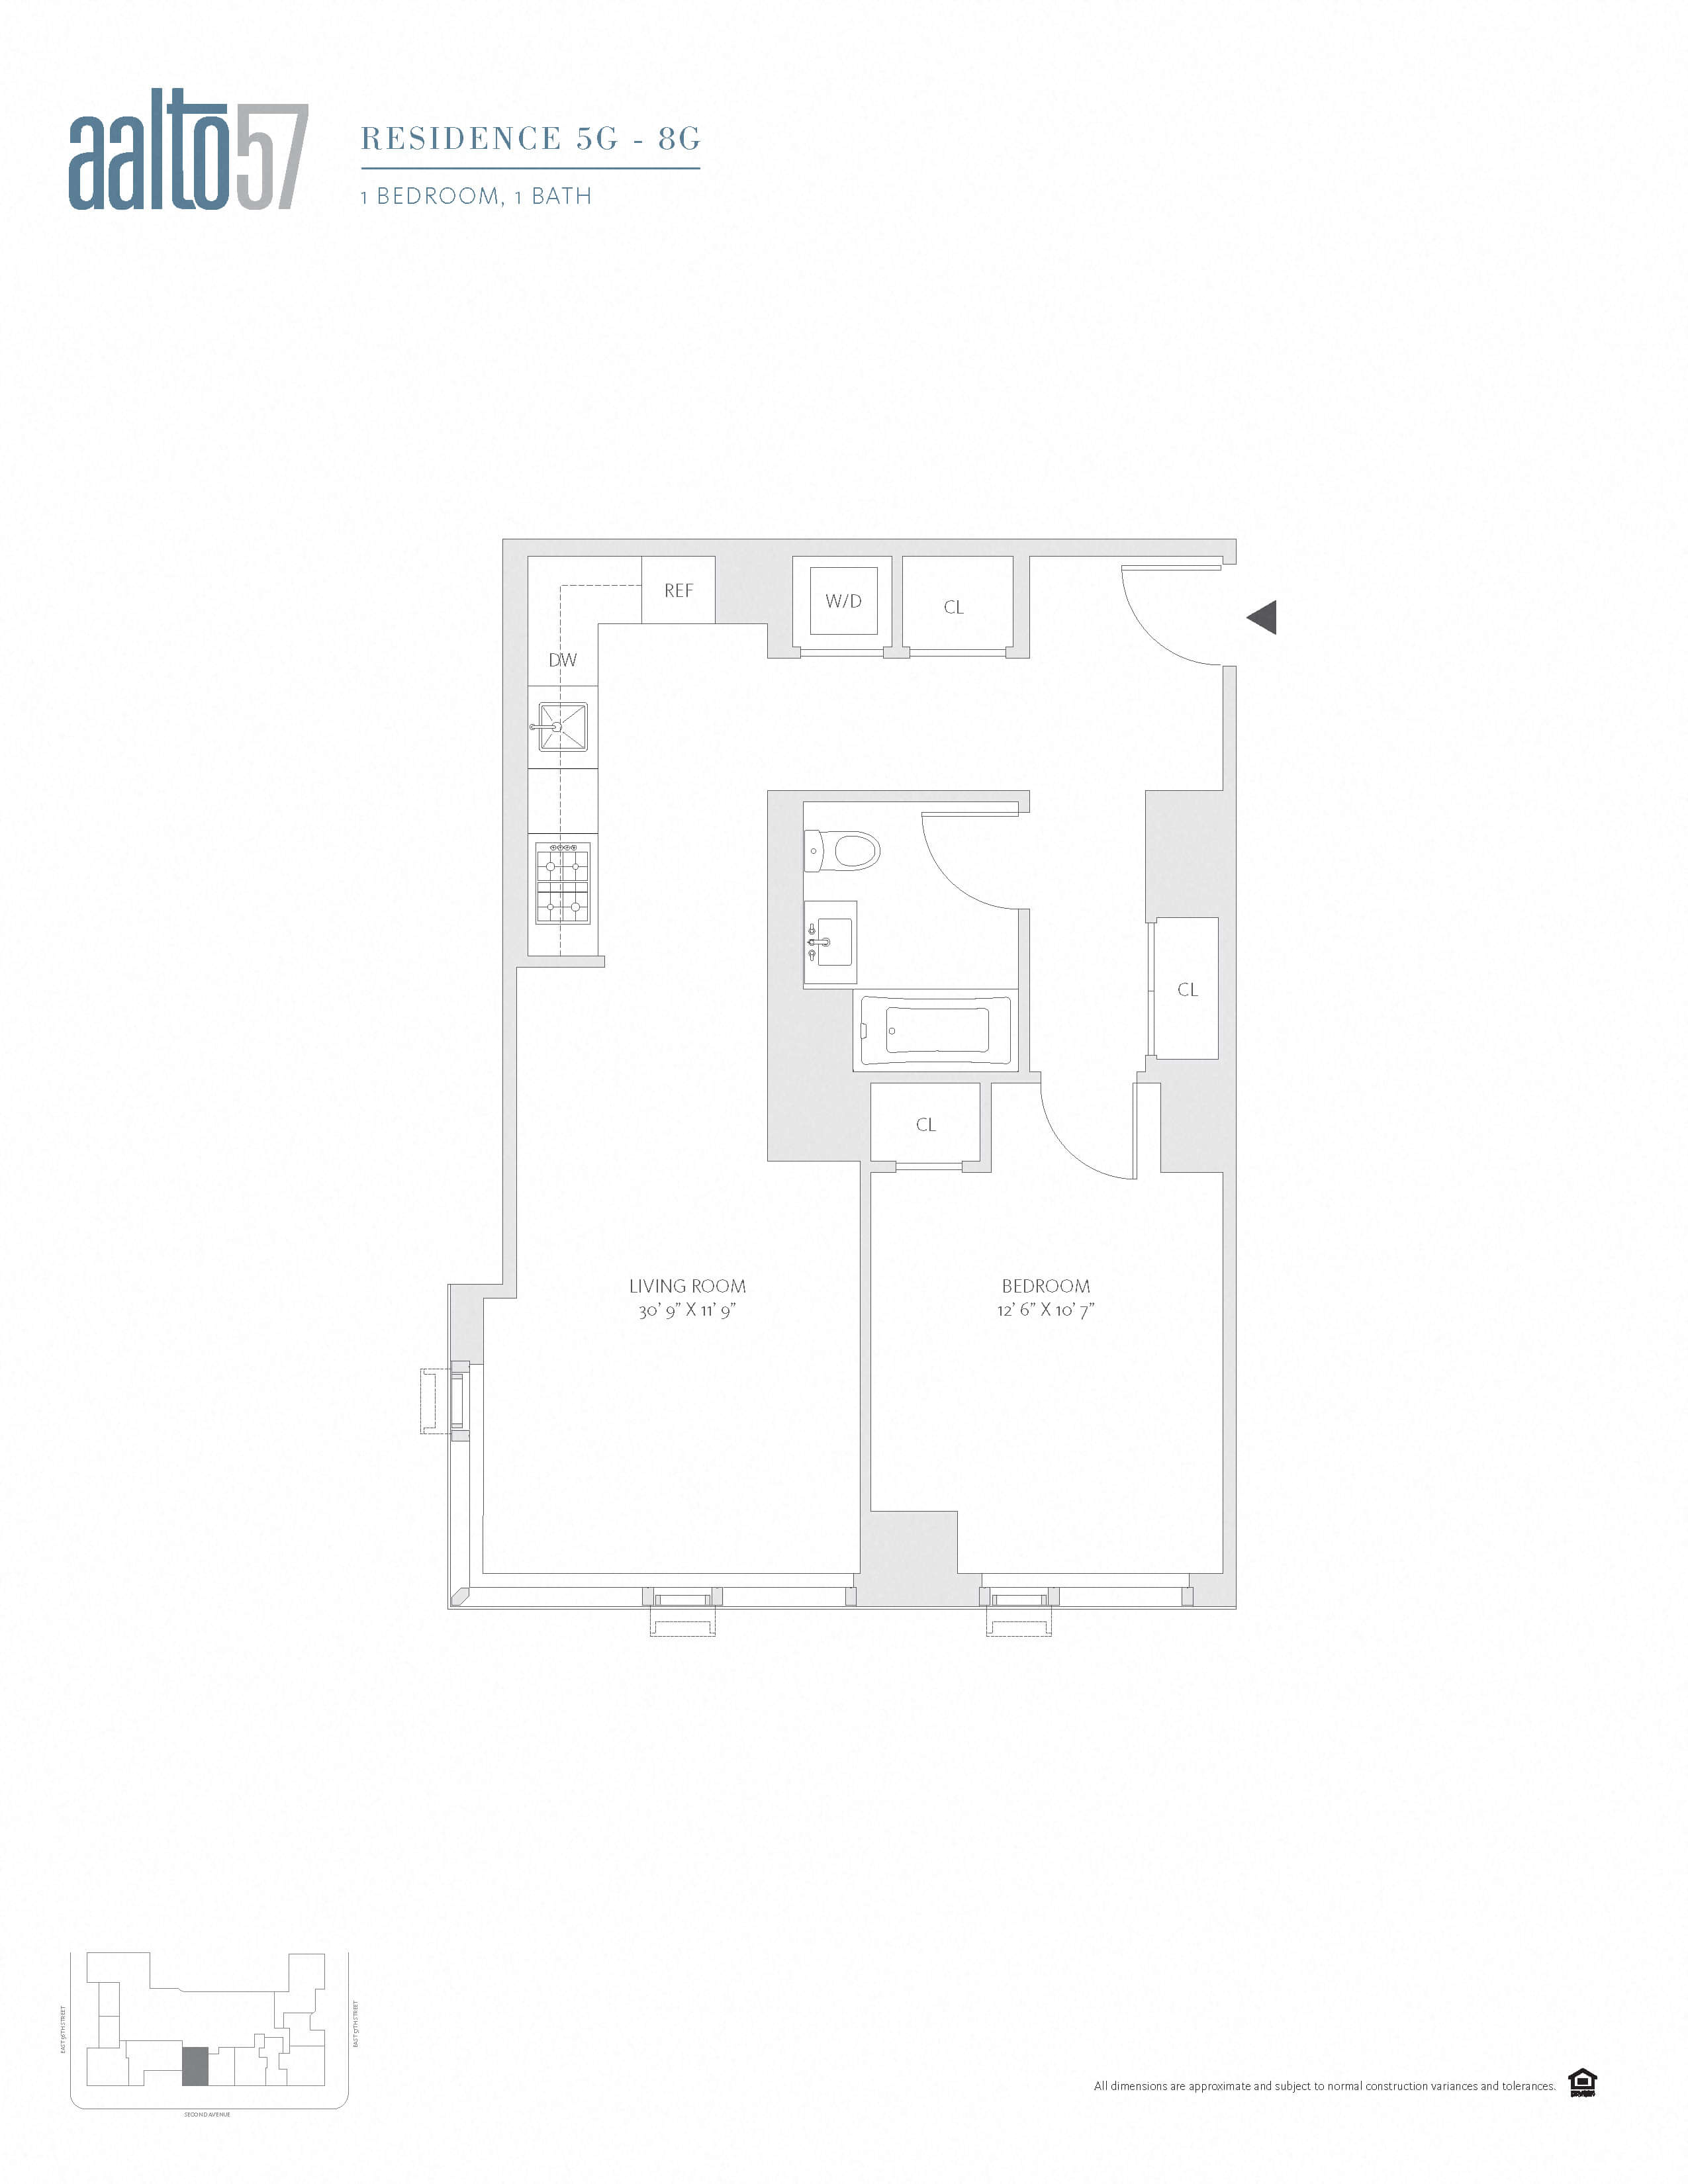 Apartment 08G floorplan